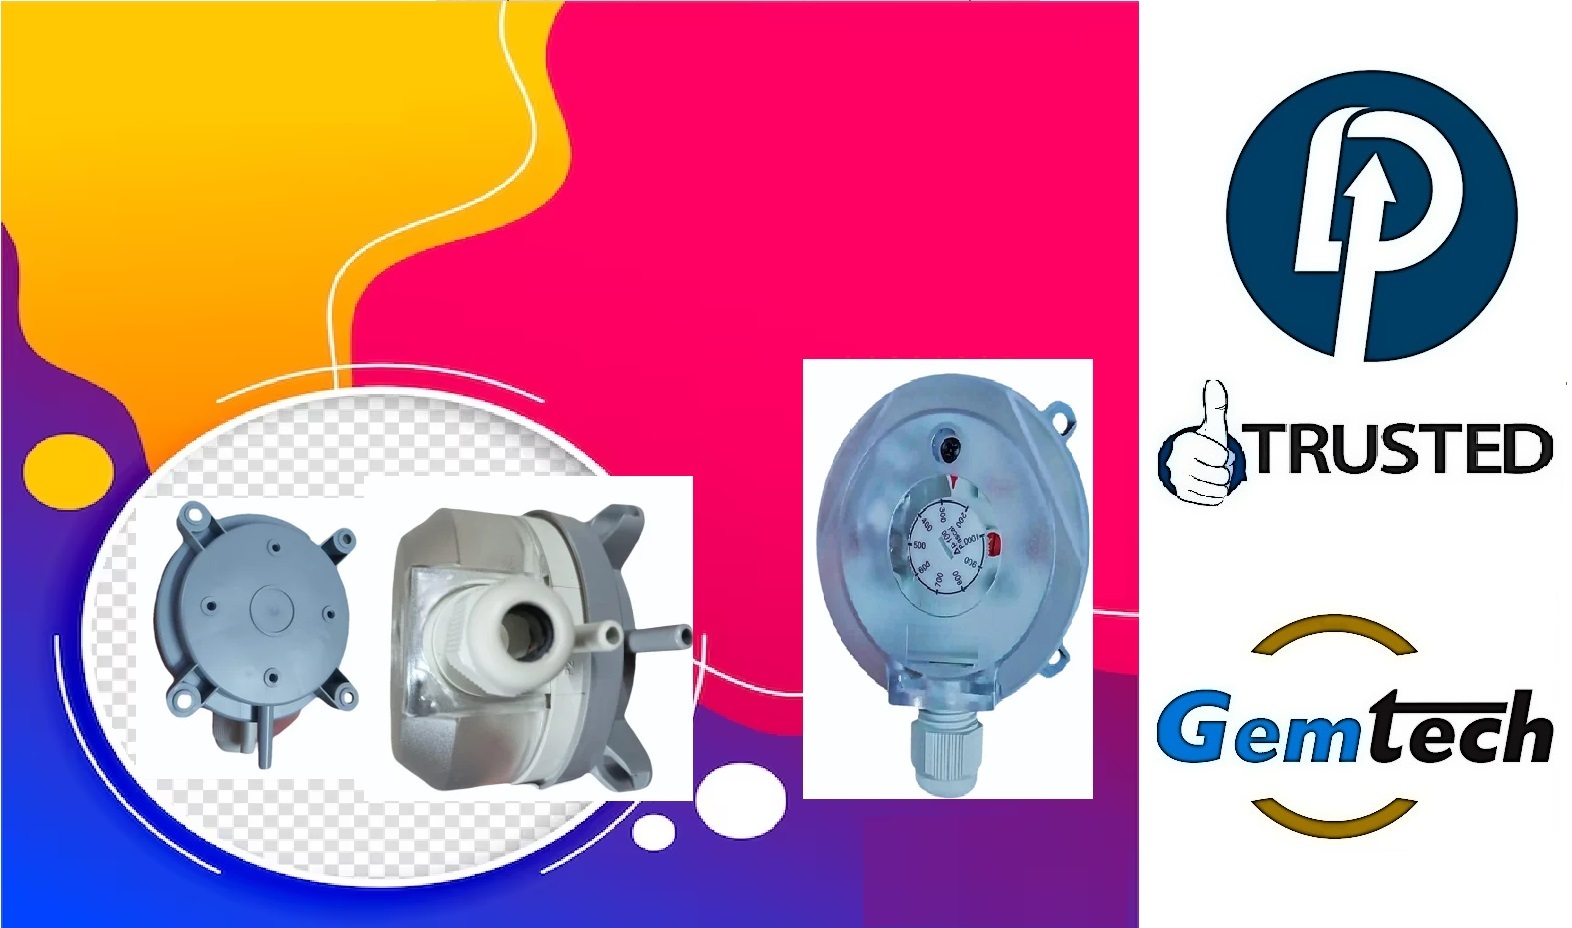 GEMTECH series 930.80 Range 20 -200 pa Differential Pressure switch by Alwar Rajasthan